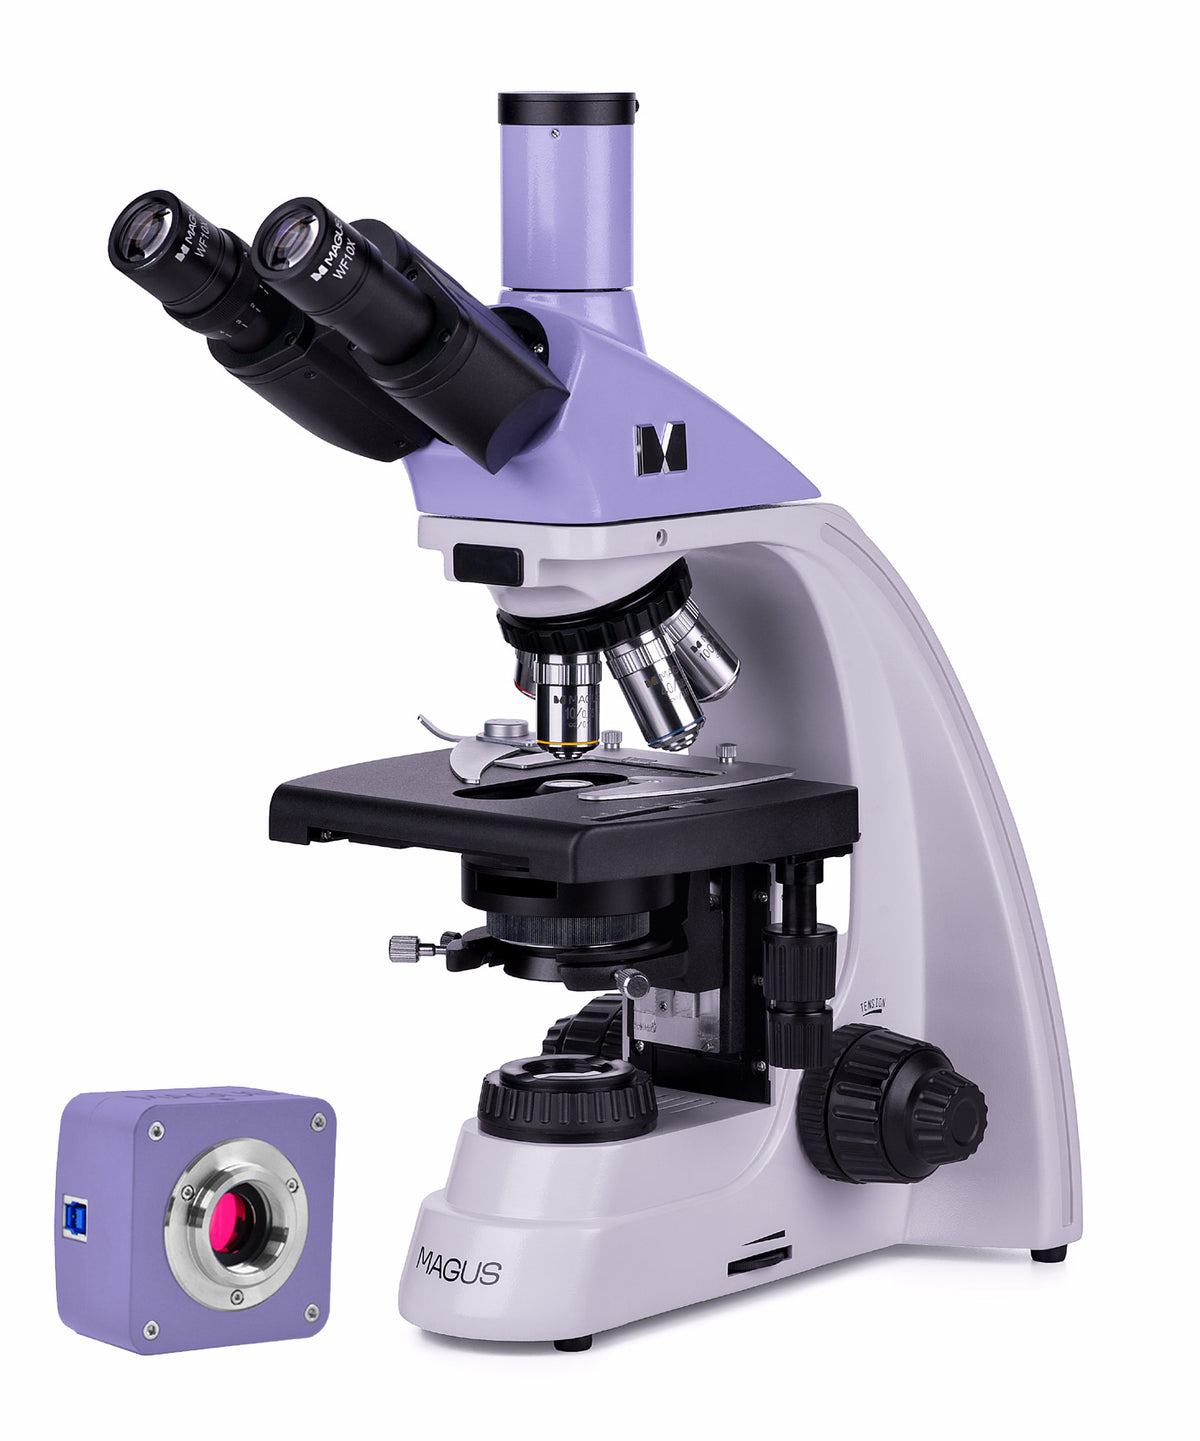 MAGUS Bio D230TL Biological Digital Microscope